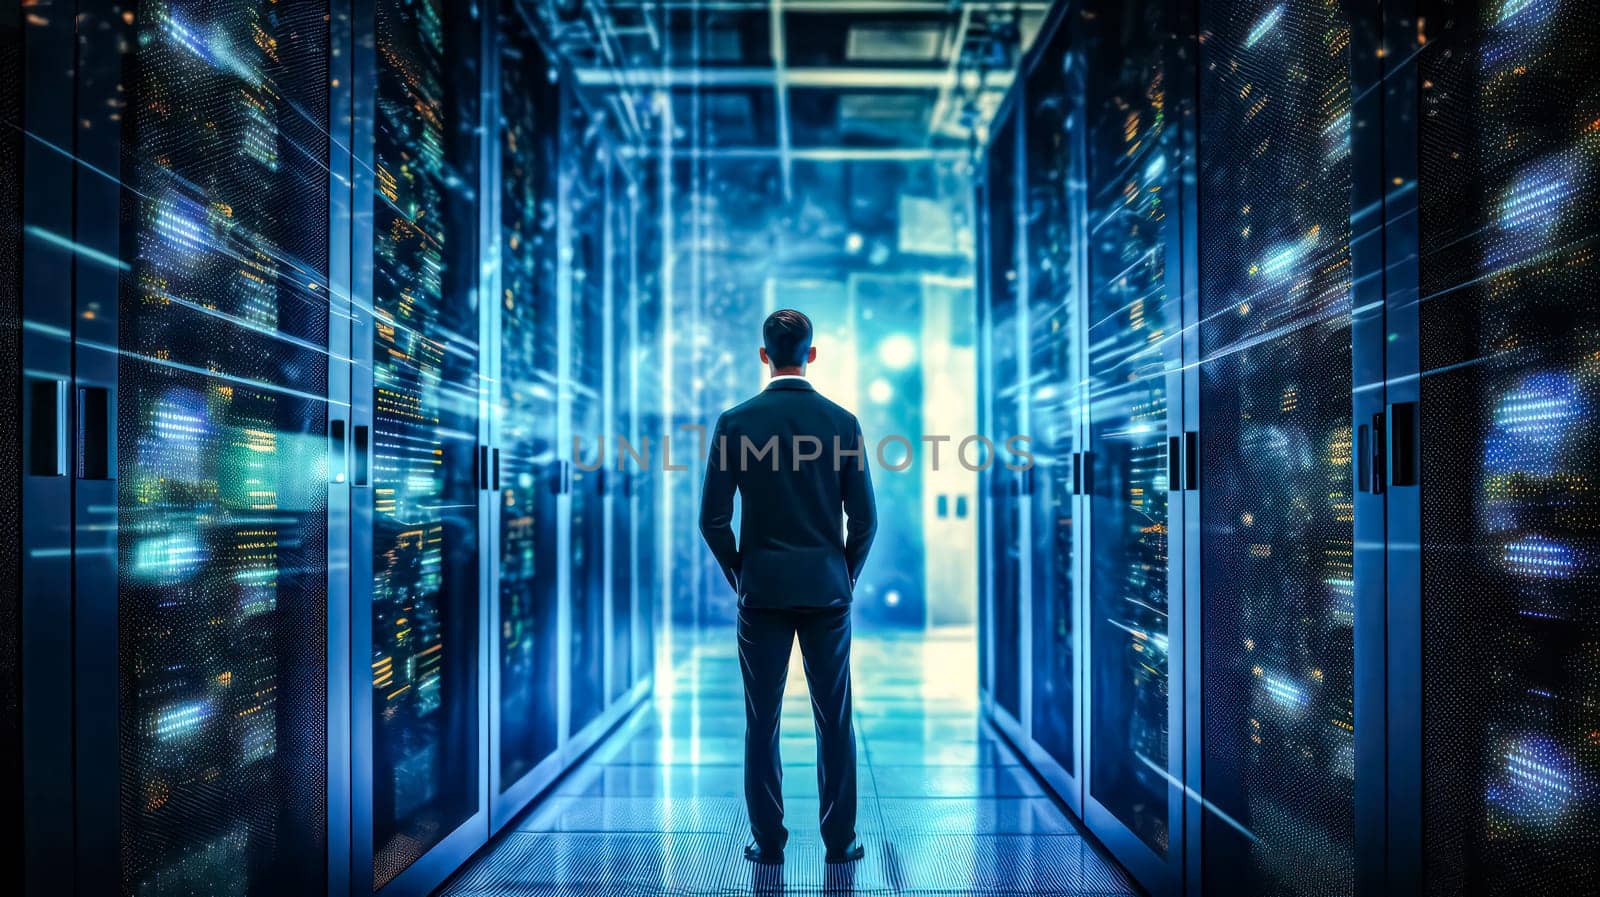 Businessman walks through data center corridor, visually inspecting working server racks standard illustration of technical expertise and management.